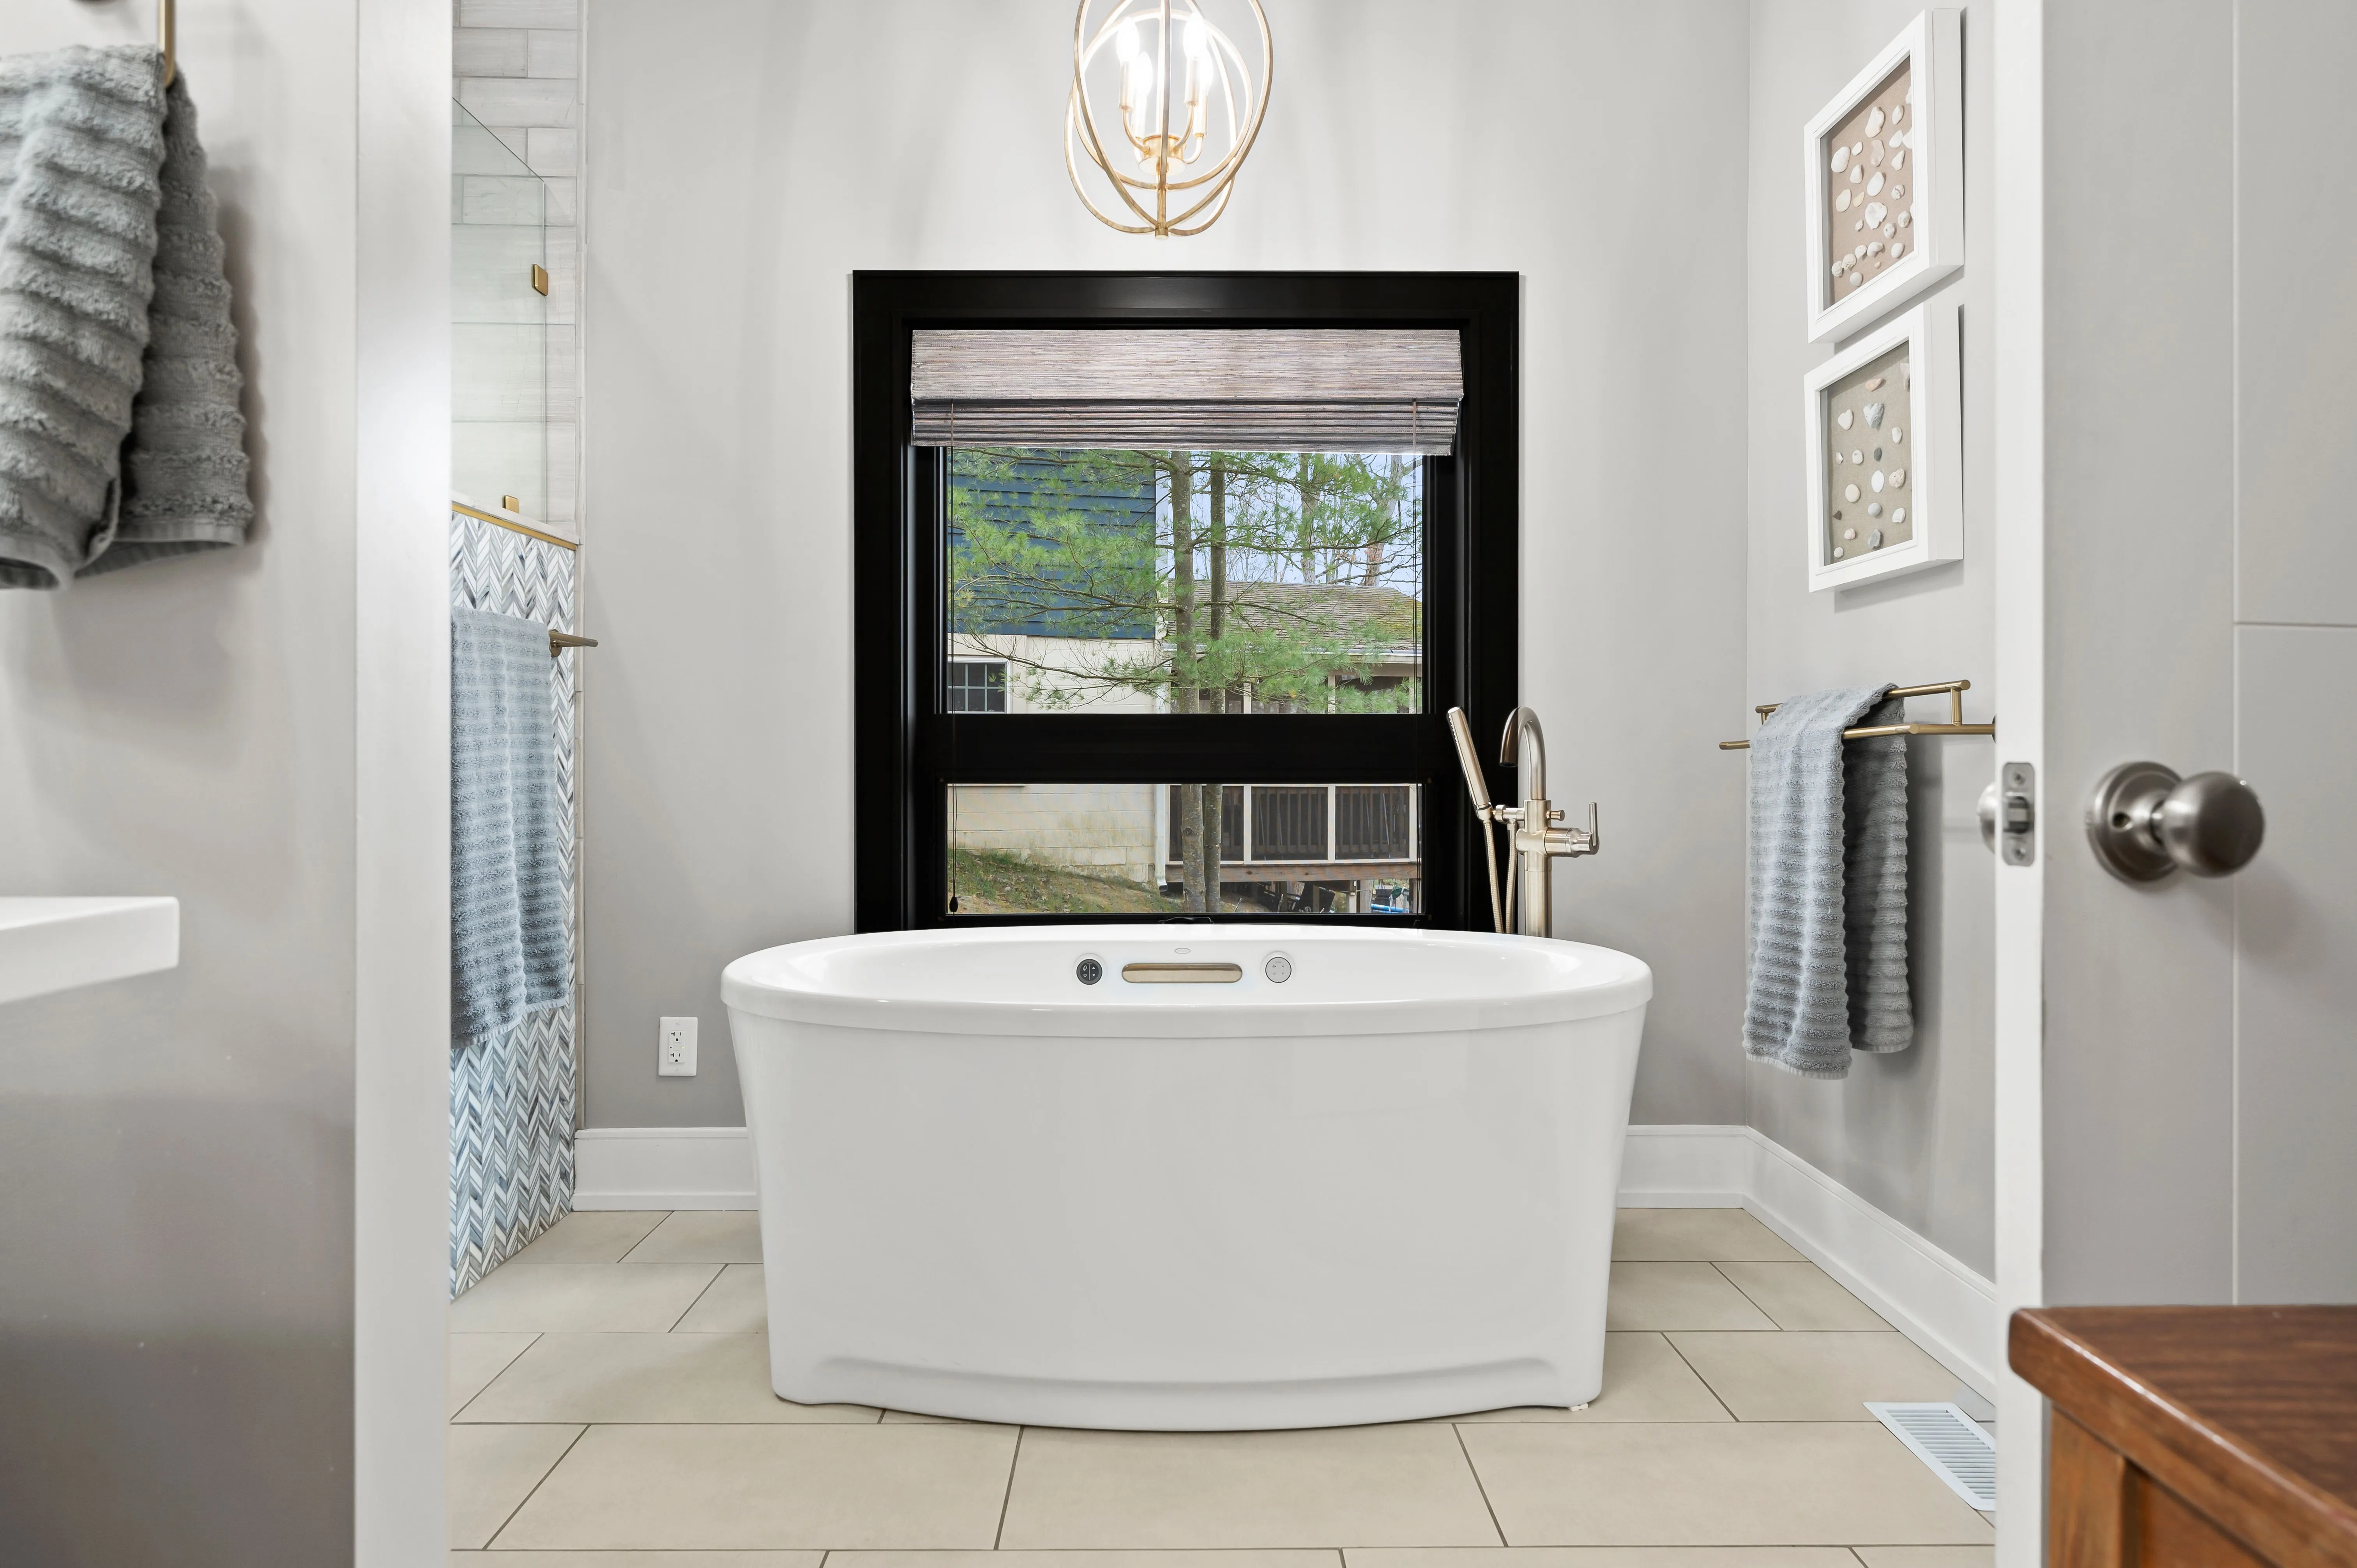 Modern bathroom interior with a freestanding tub, gray tiles, black framed window, and elegant lighting fixtures.